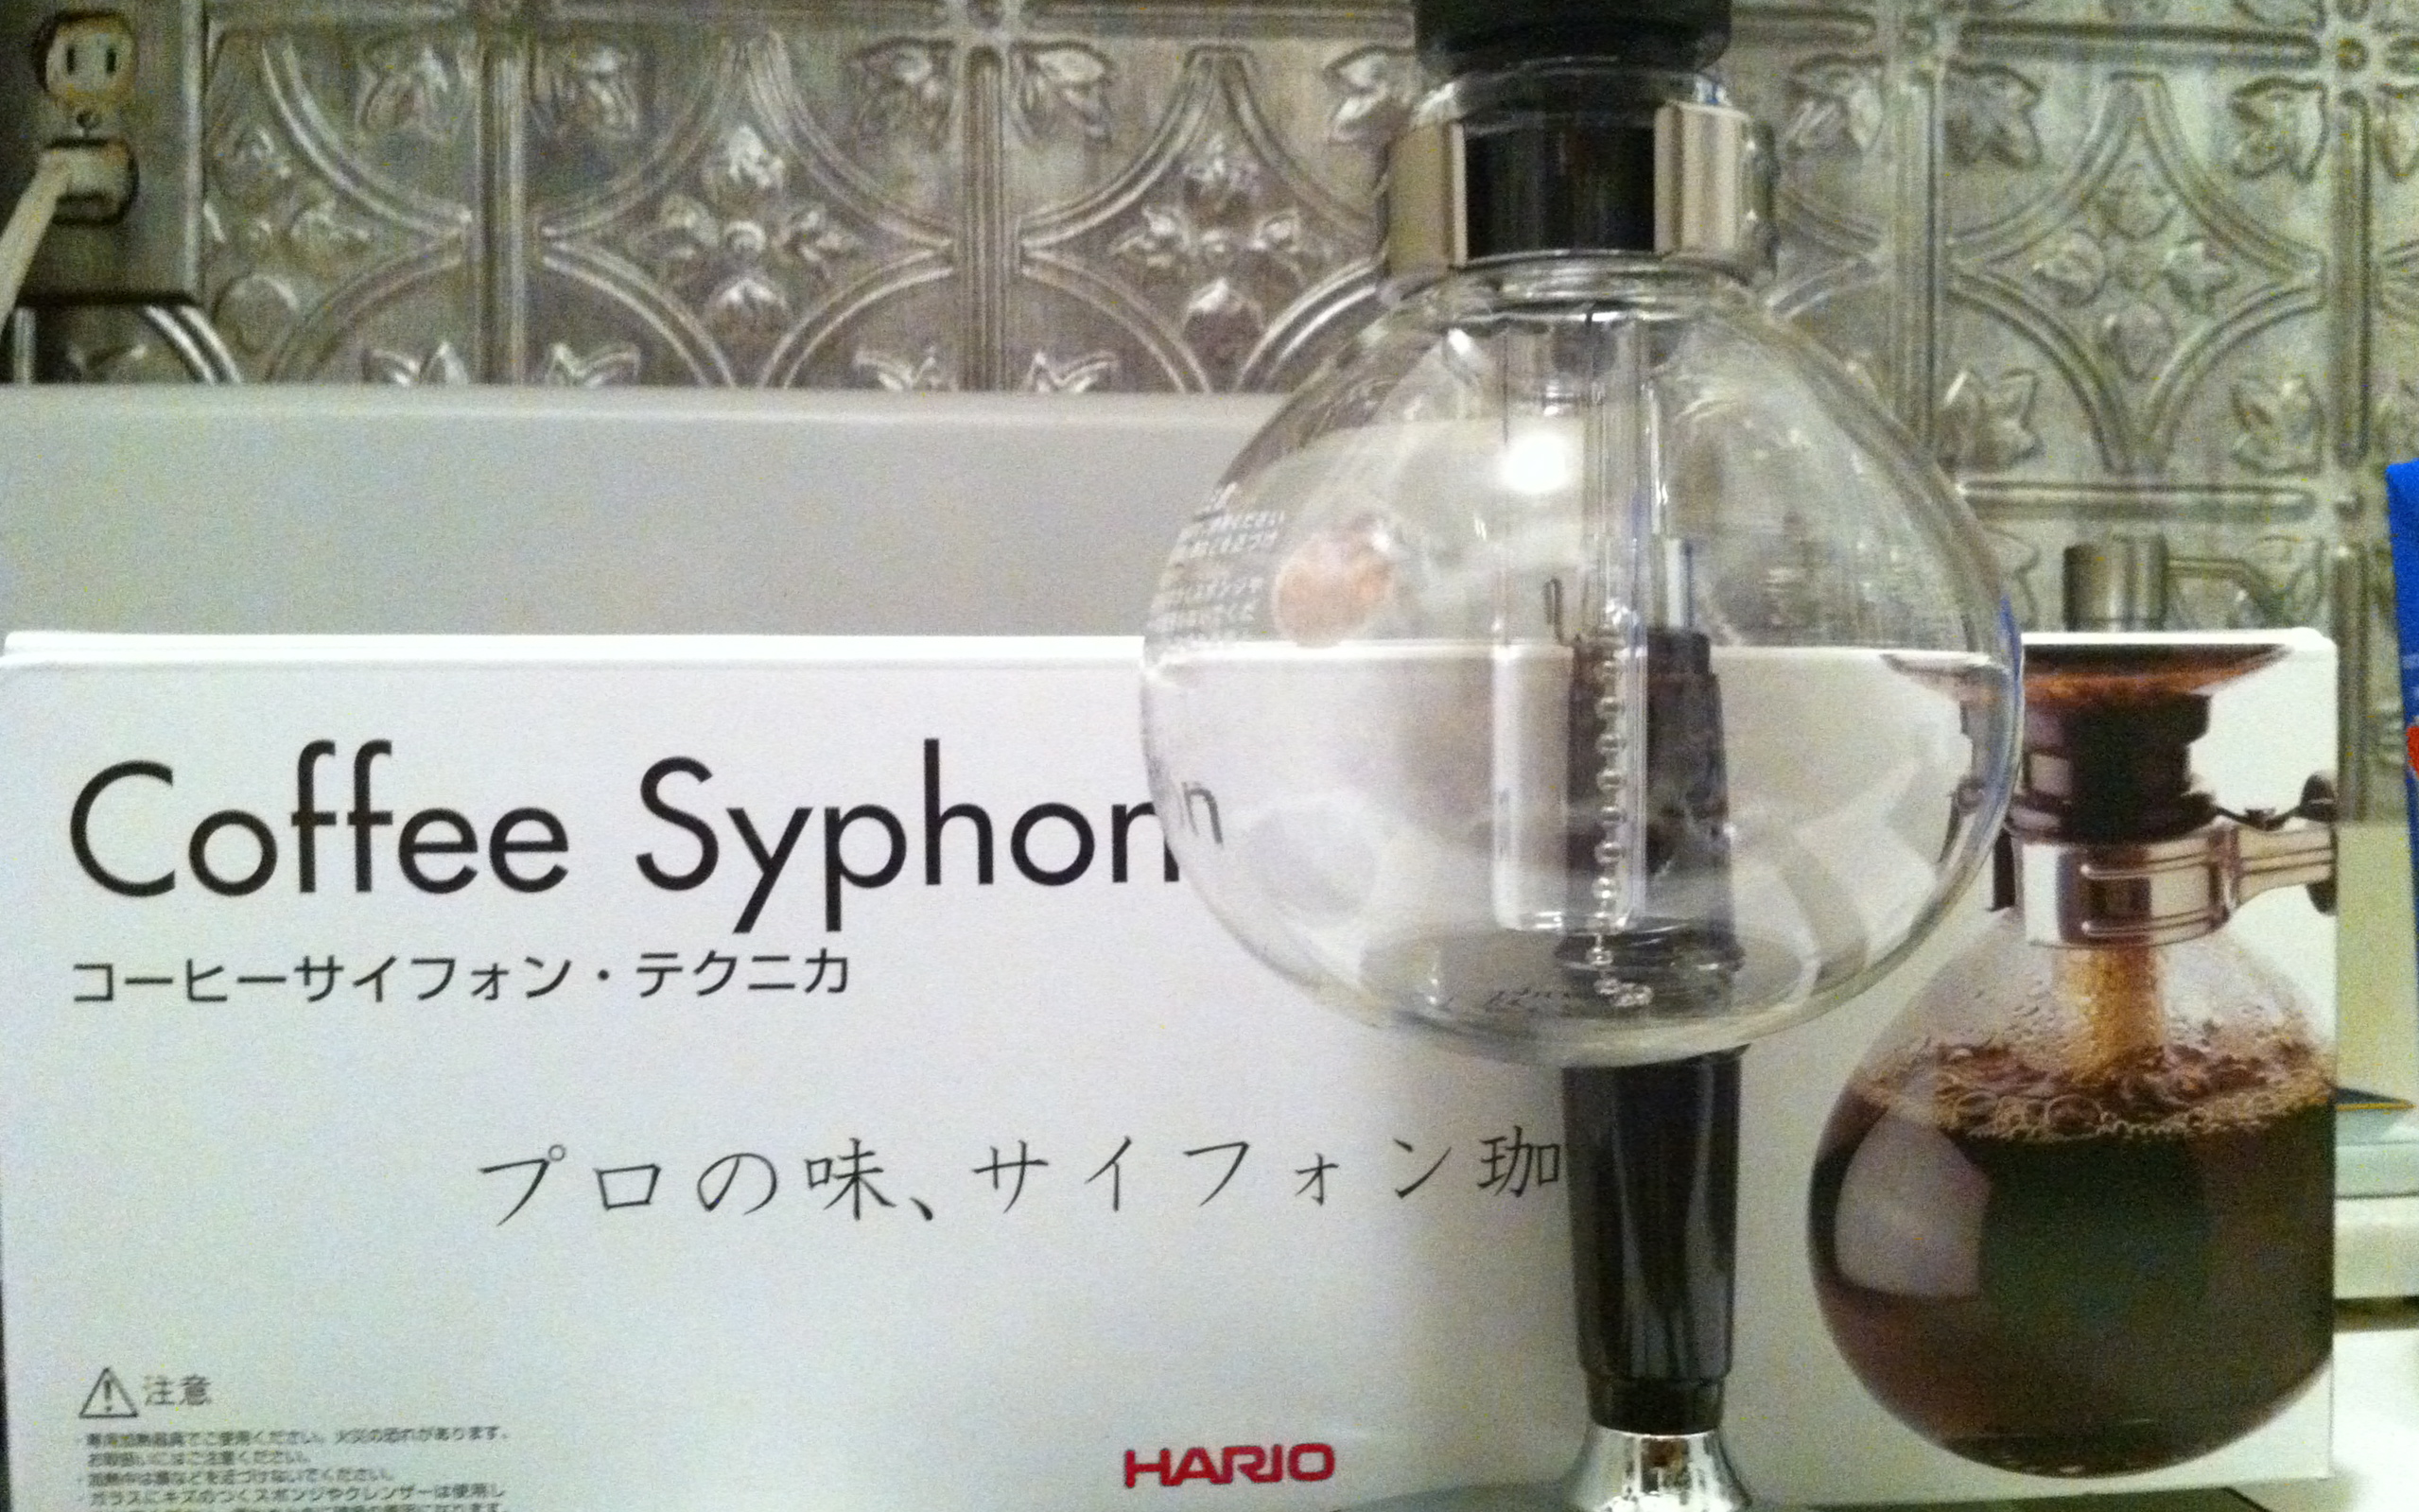 Coffee Siphon